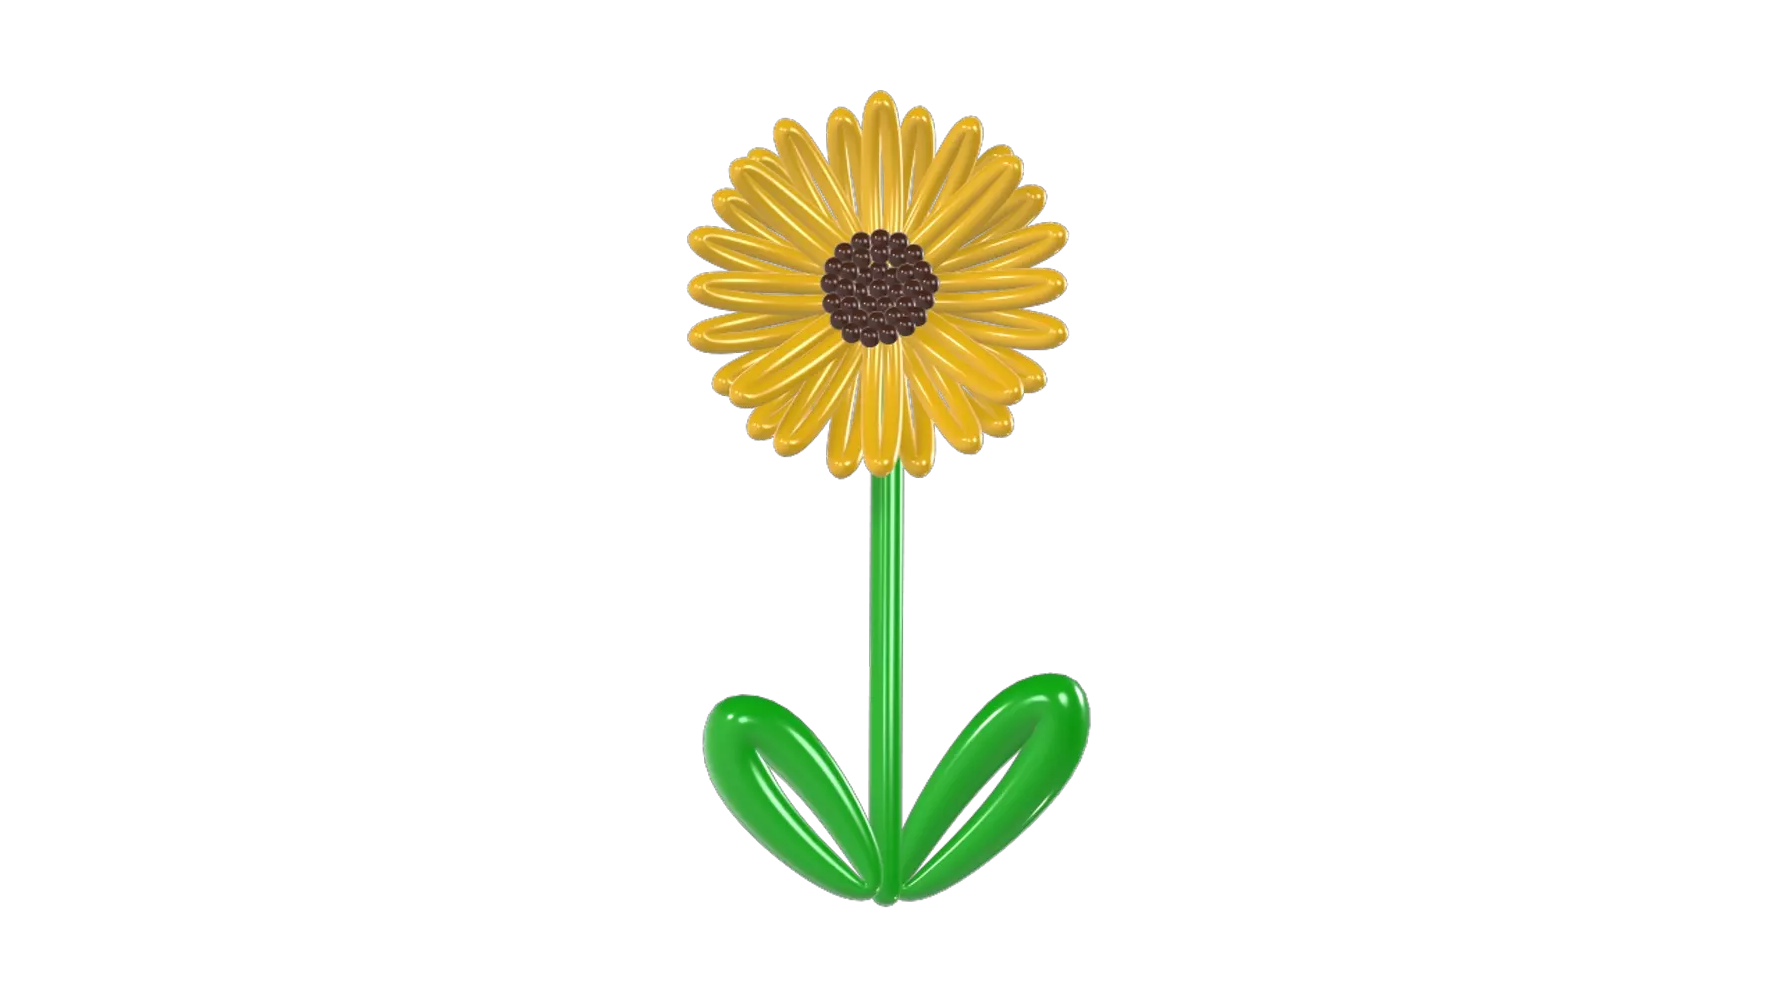 Sunflower Balloon 3D Graphic